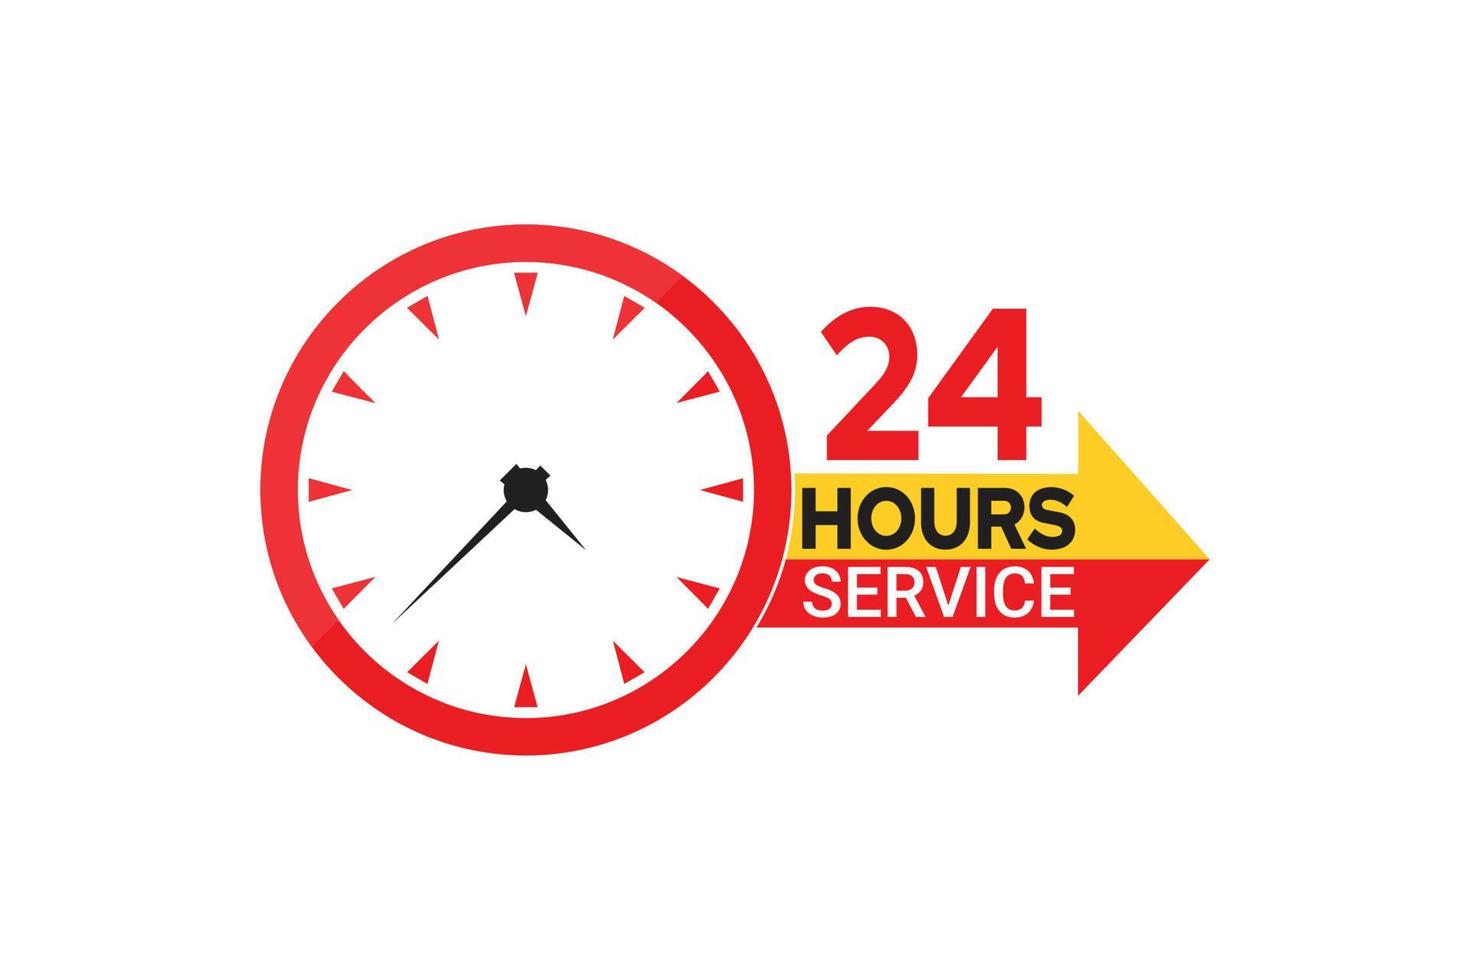 24 Hour service design element. vector